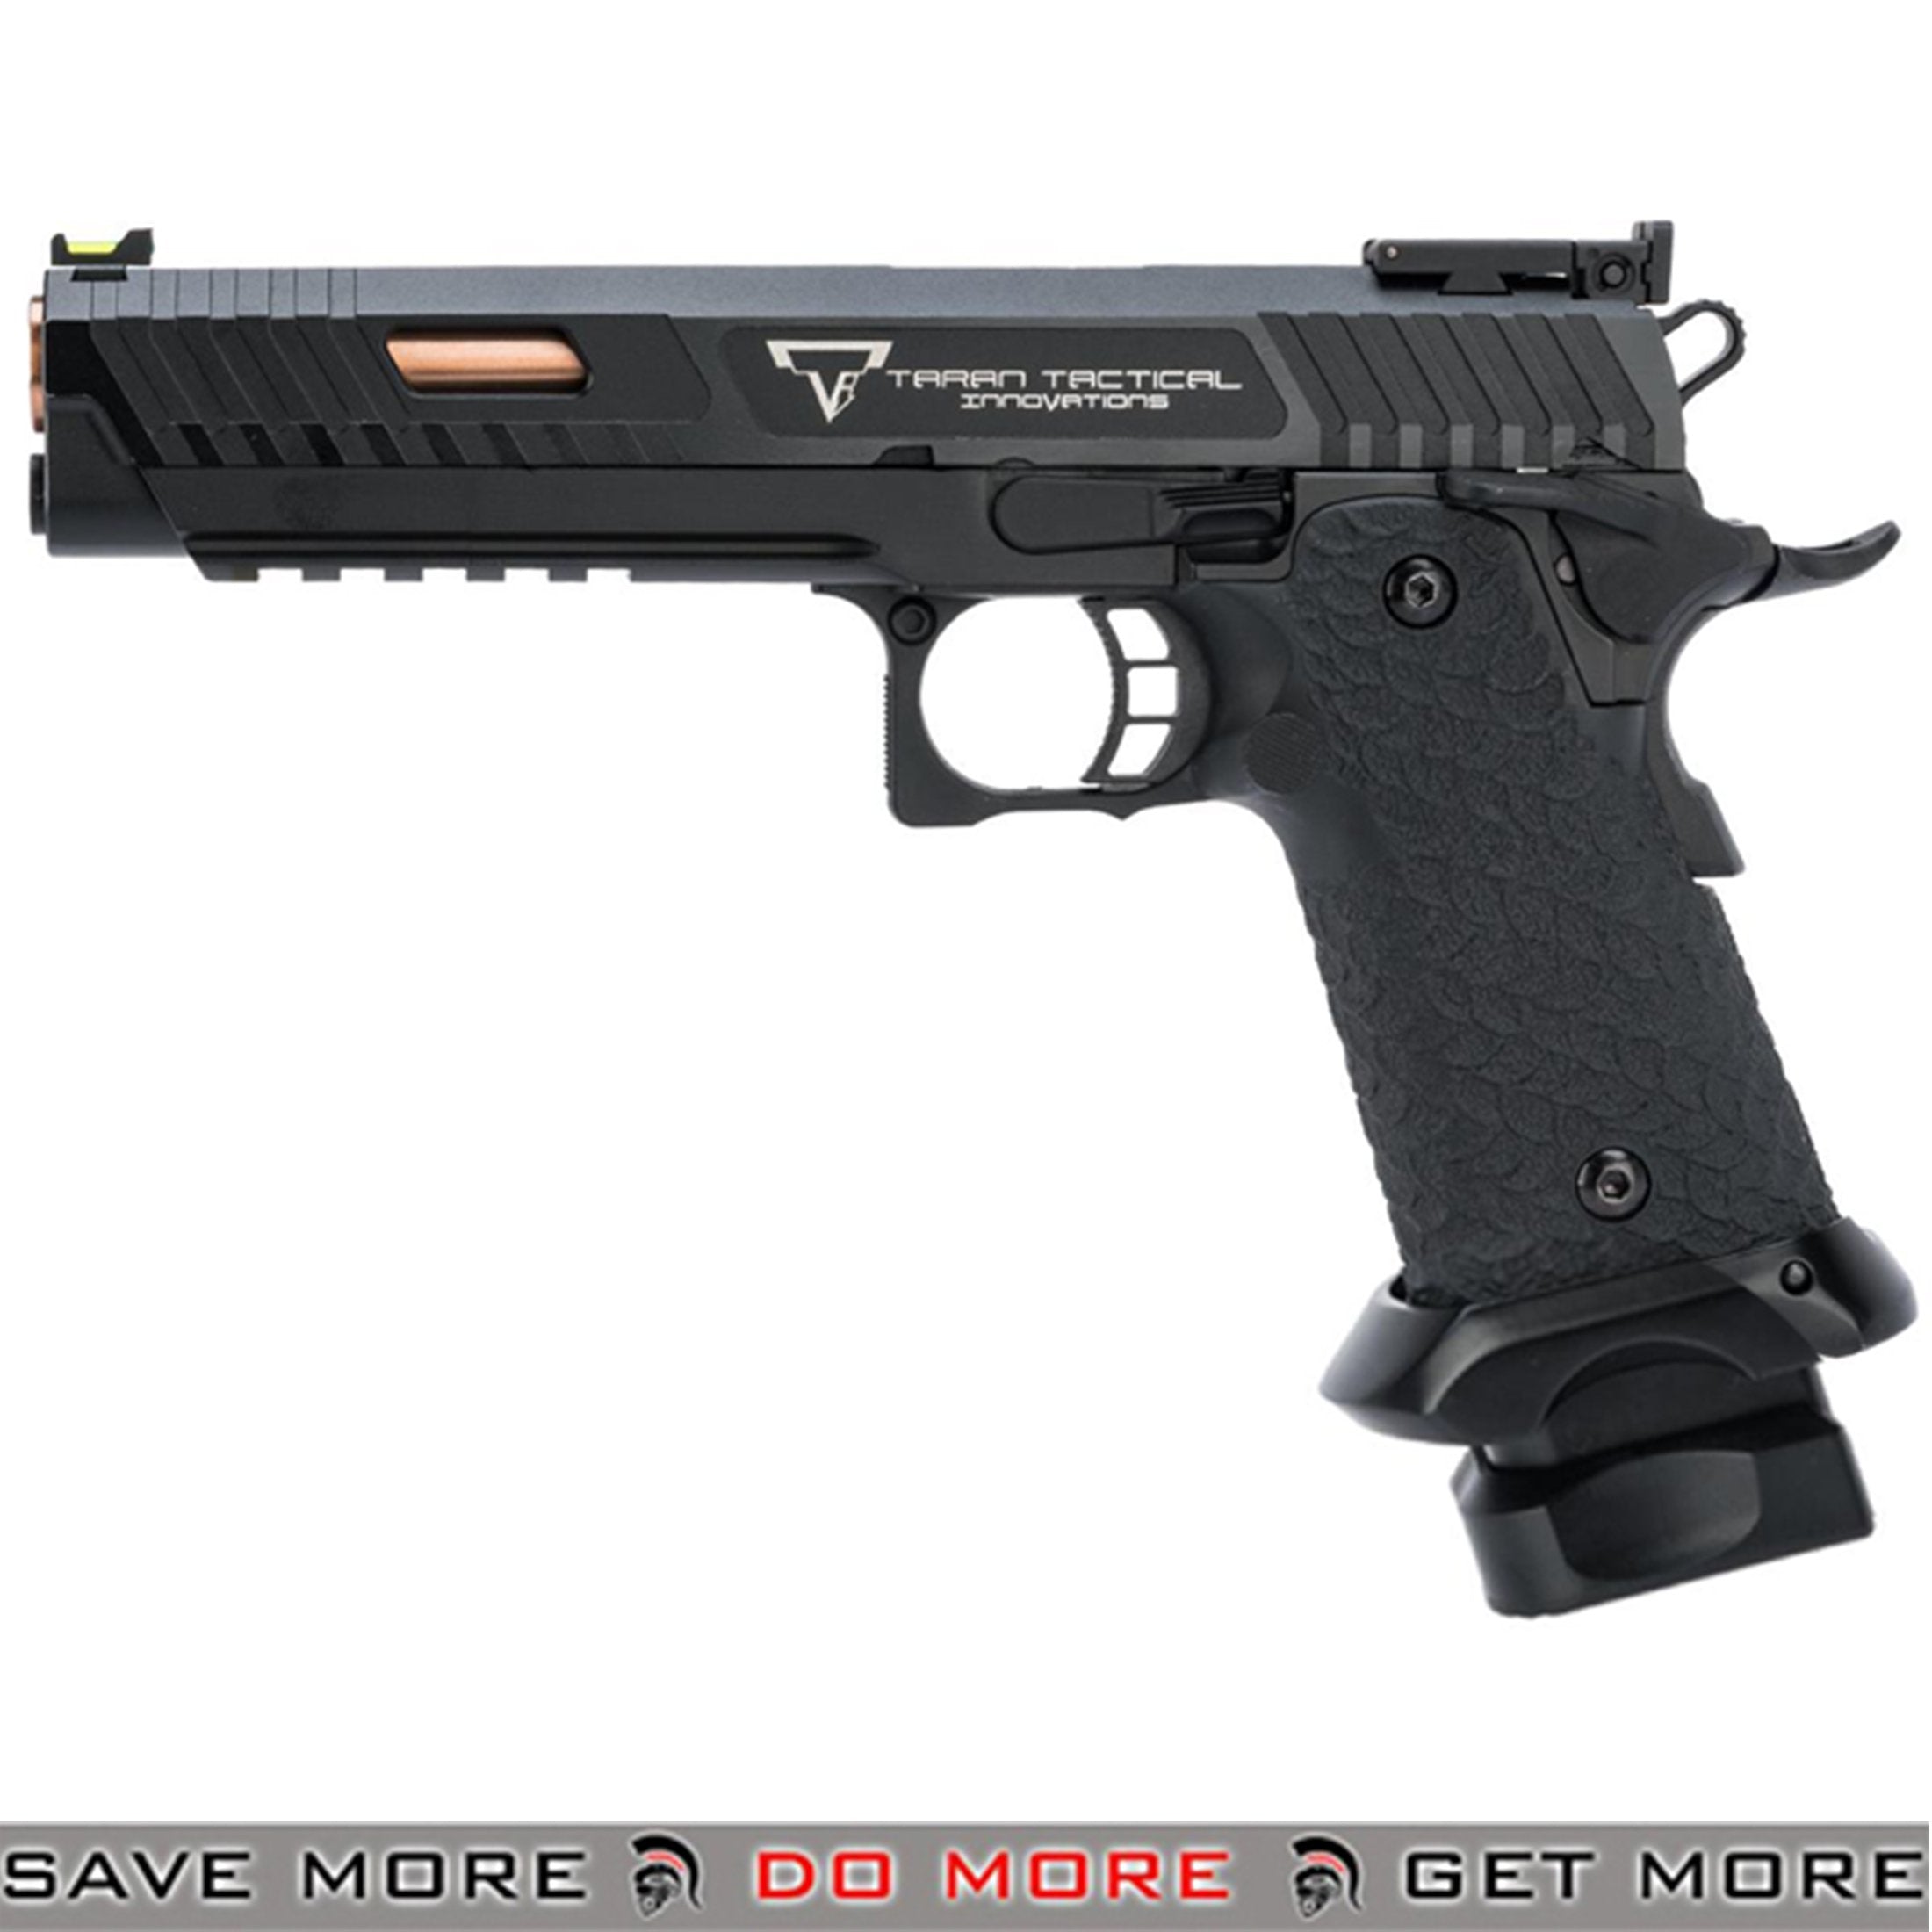 Special Edition Elite Force Glock 17 Gen 5 Gas Blowback Airsoft Pistol